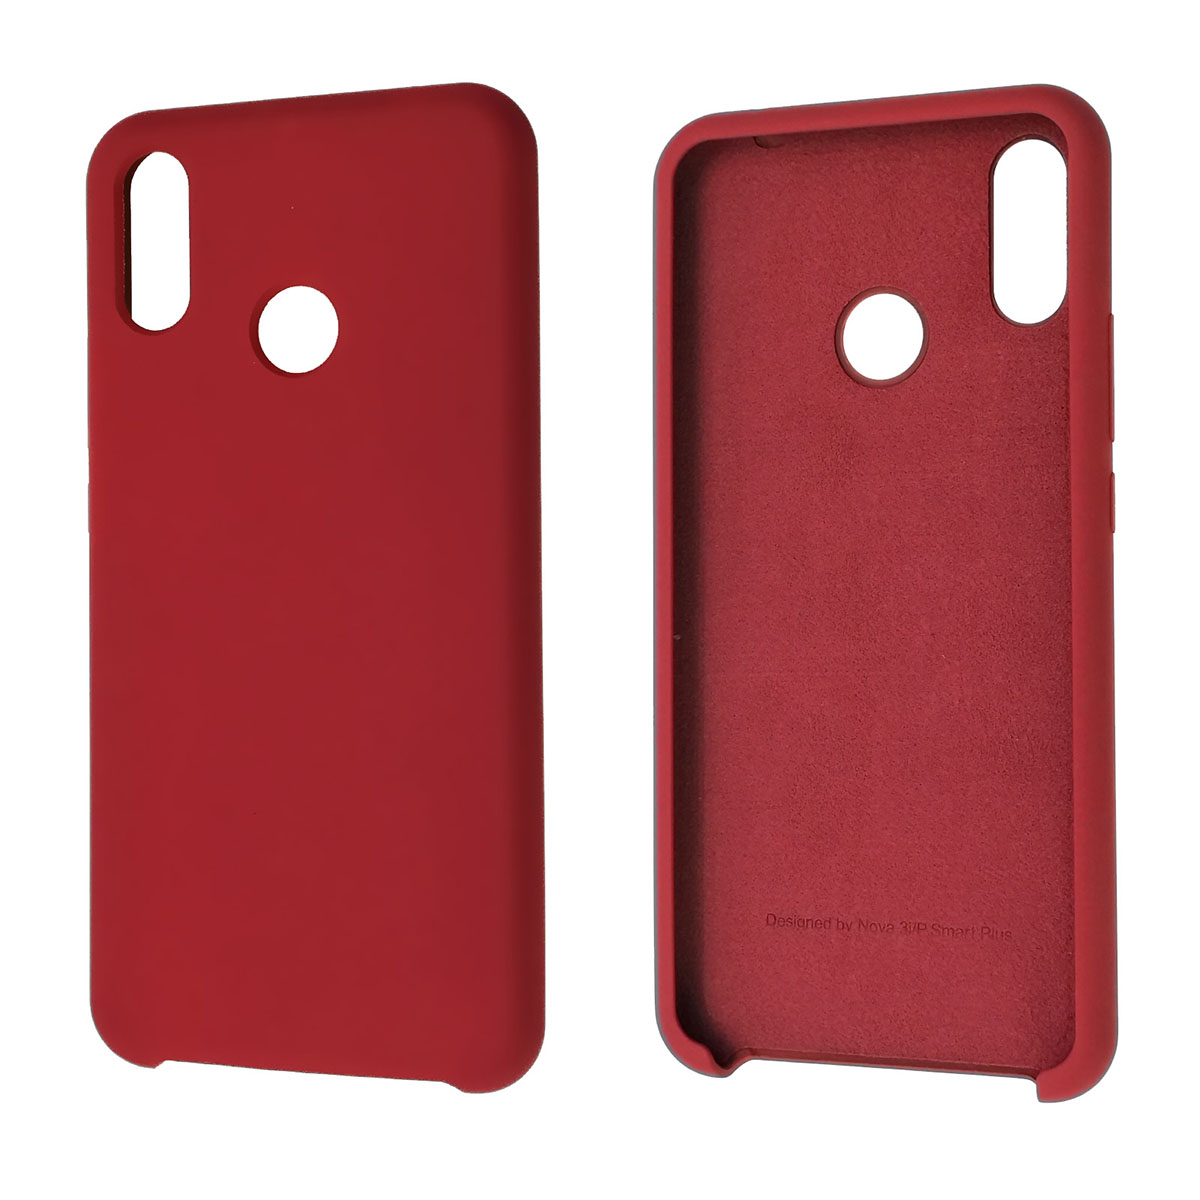 Чехол накладка Silicon Cover для HUAWEI Nova 3i, силикон, бархат, цвет бордовый.